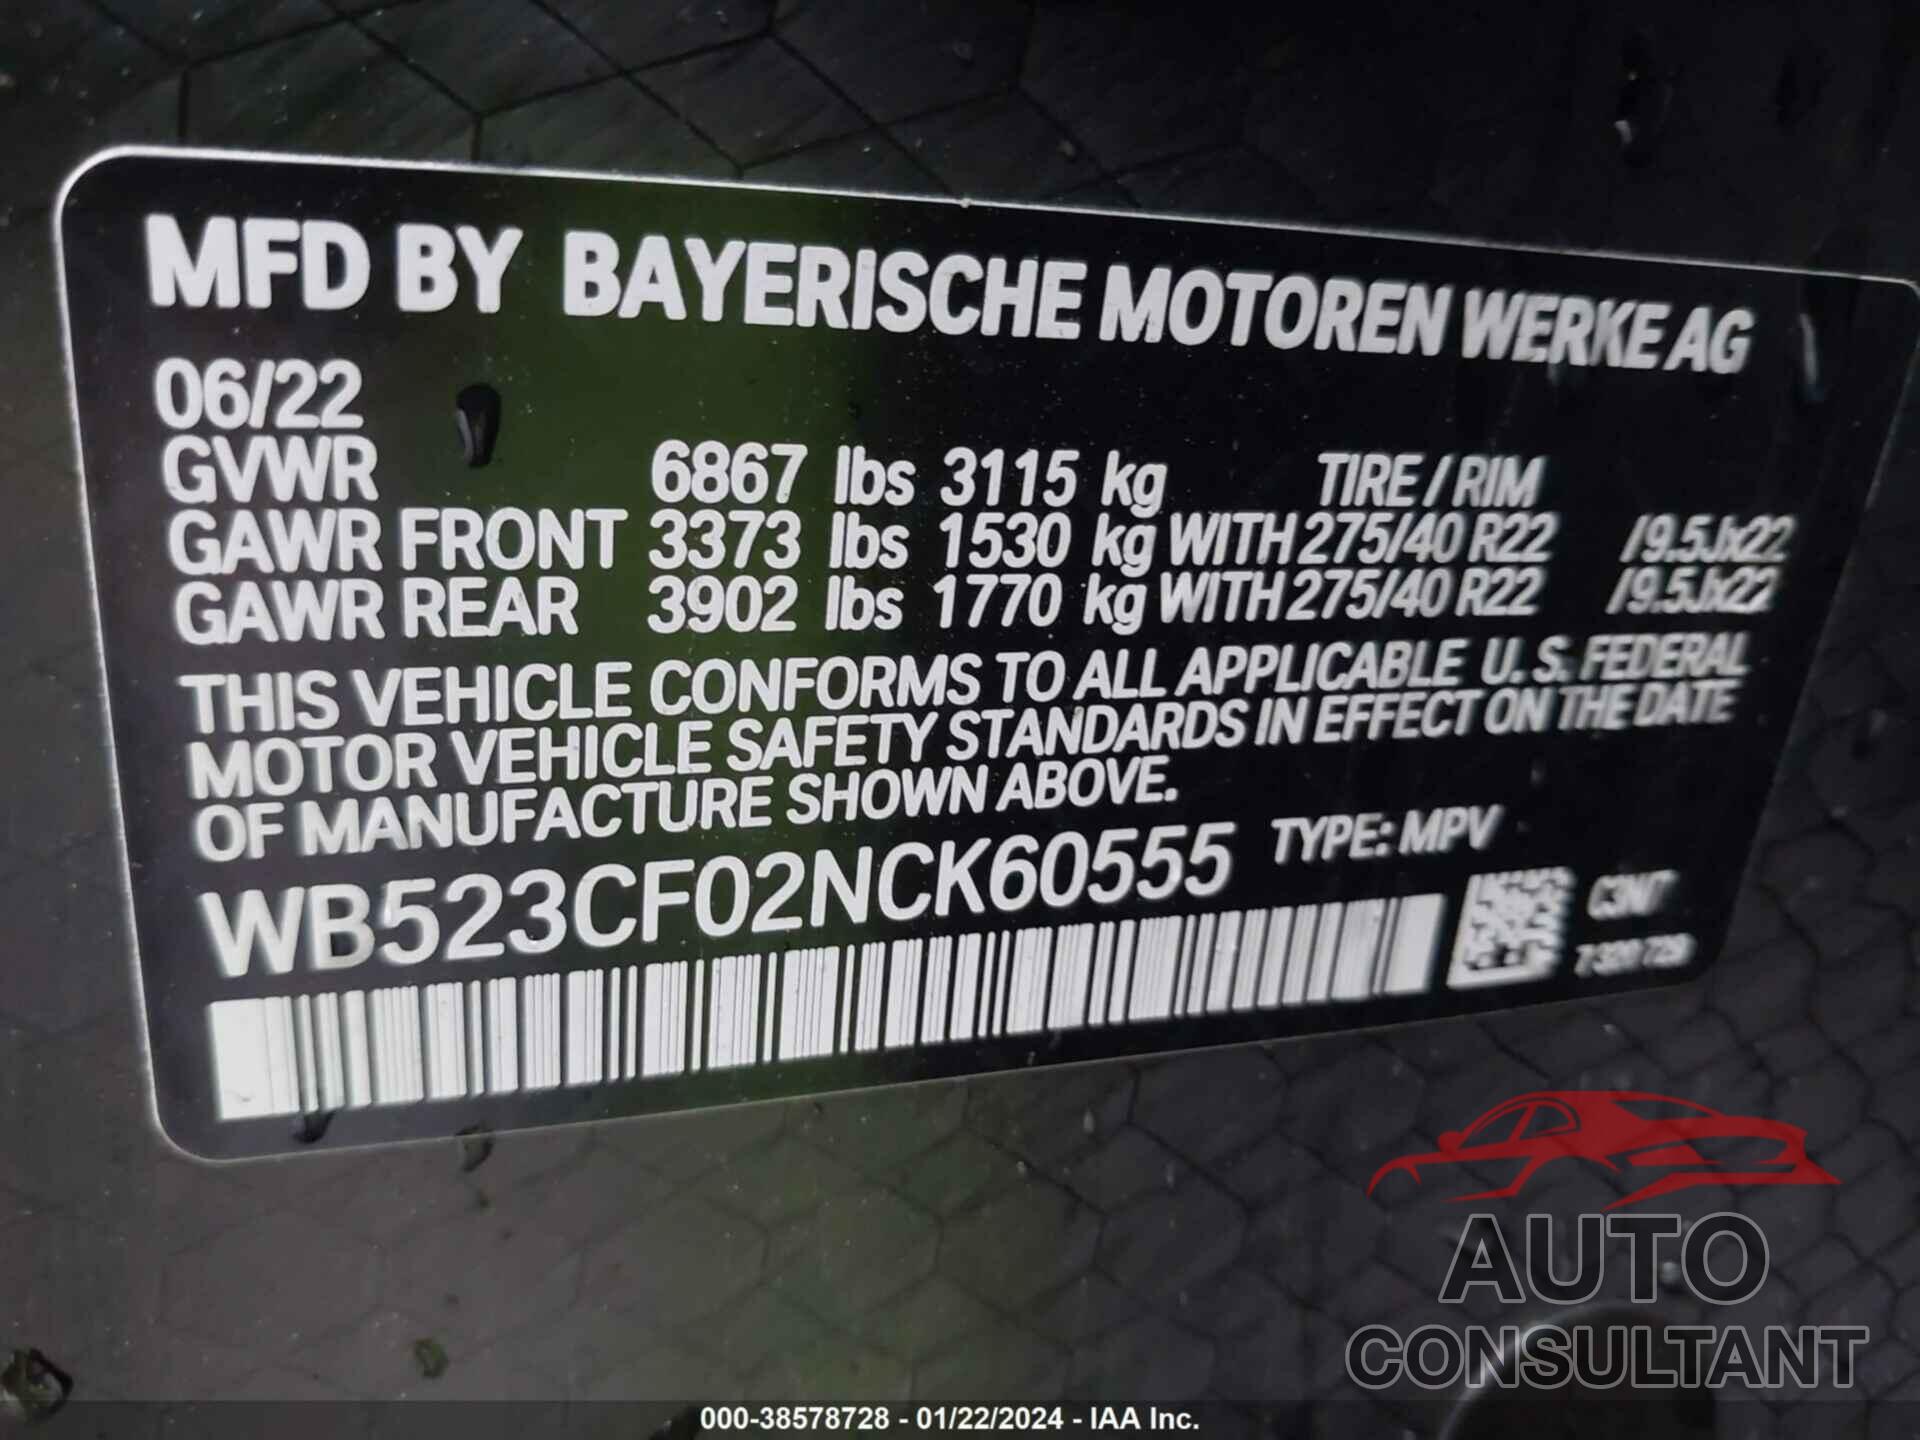 BMW IX 2022 - WB523CF02NCK60555